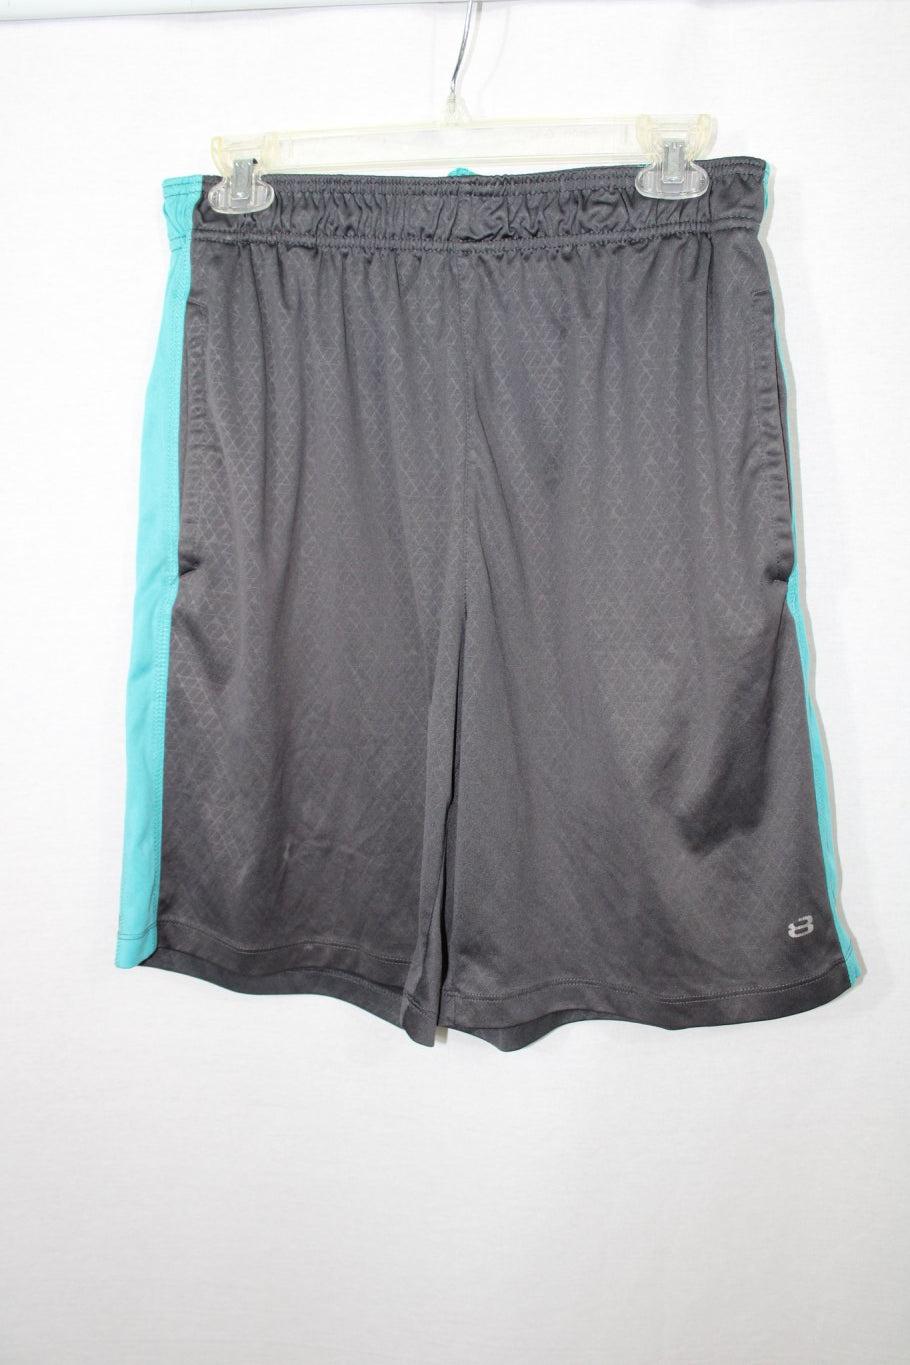 Layer 8 Athletic Shorts | M